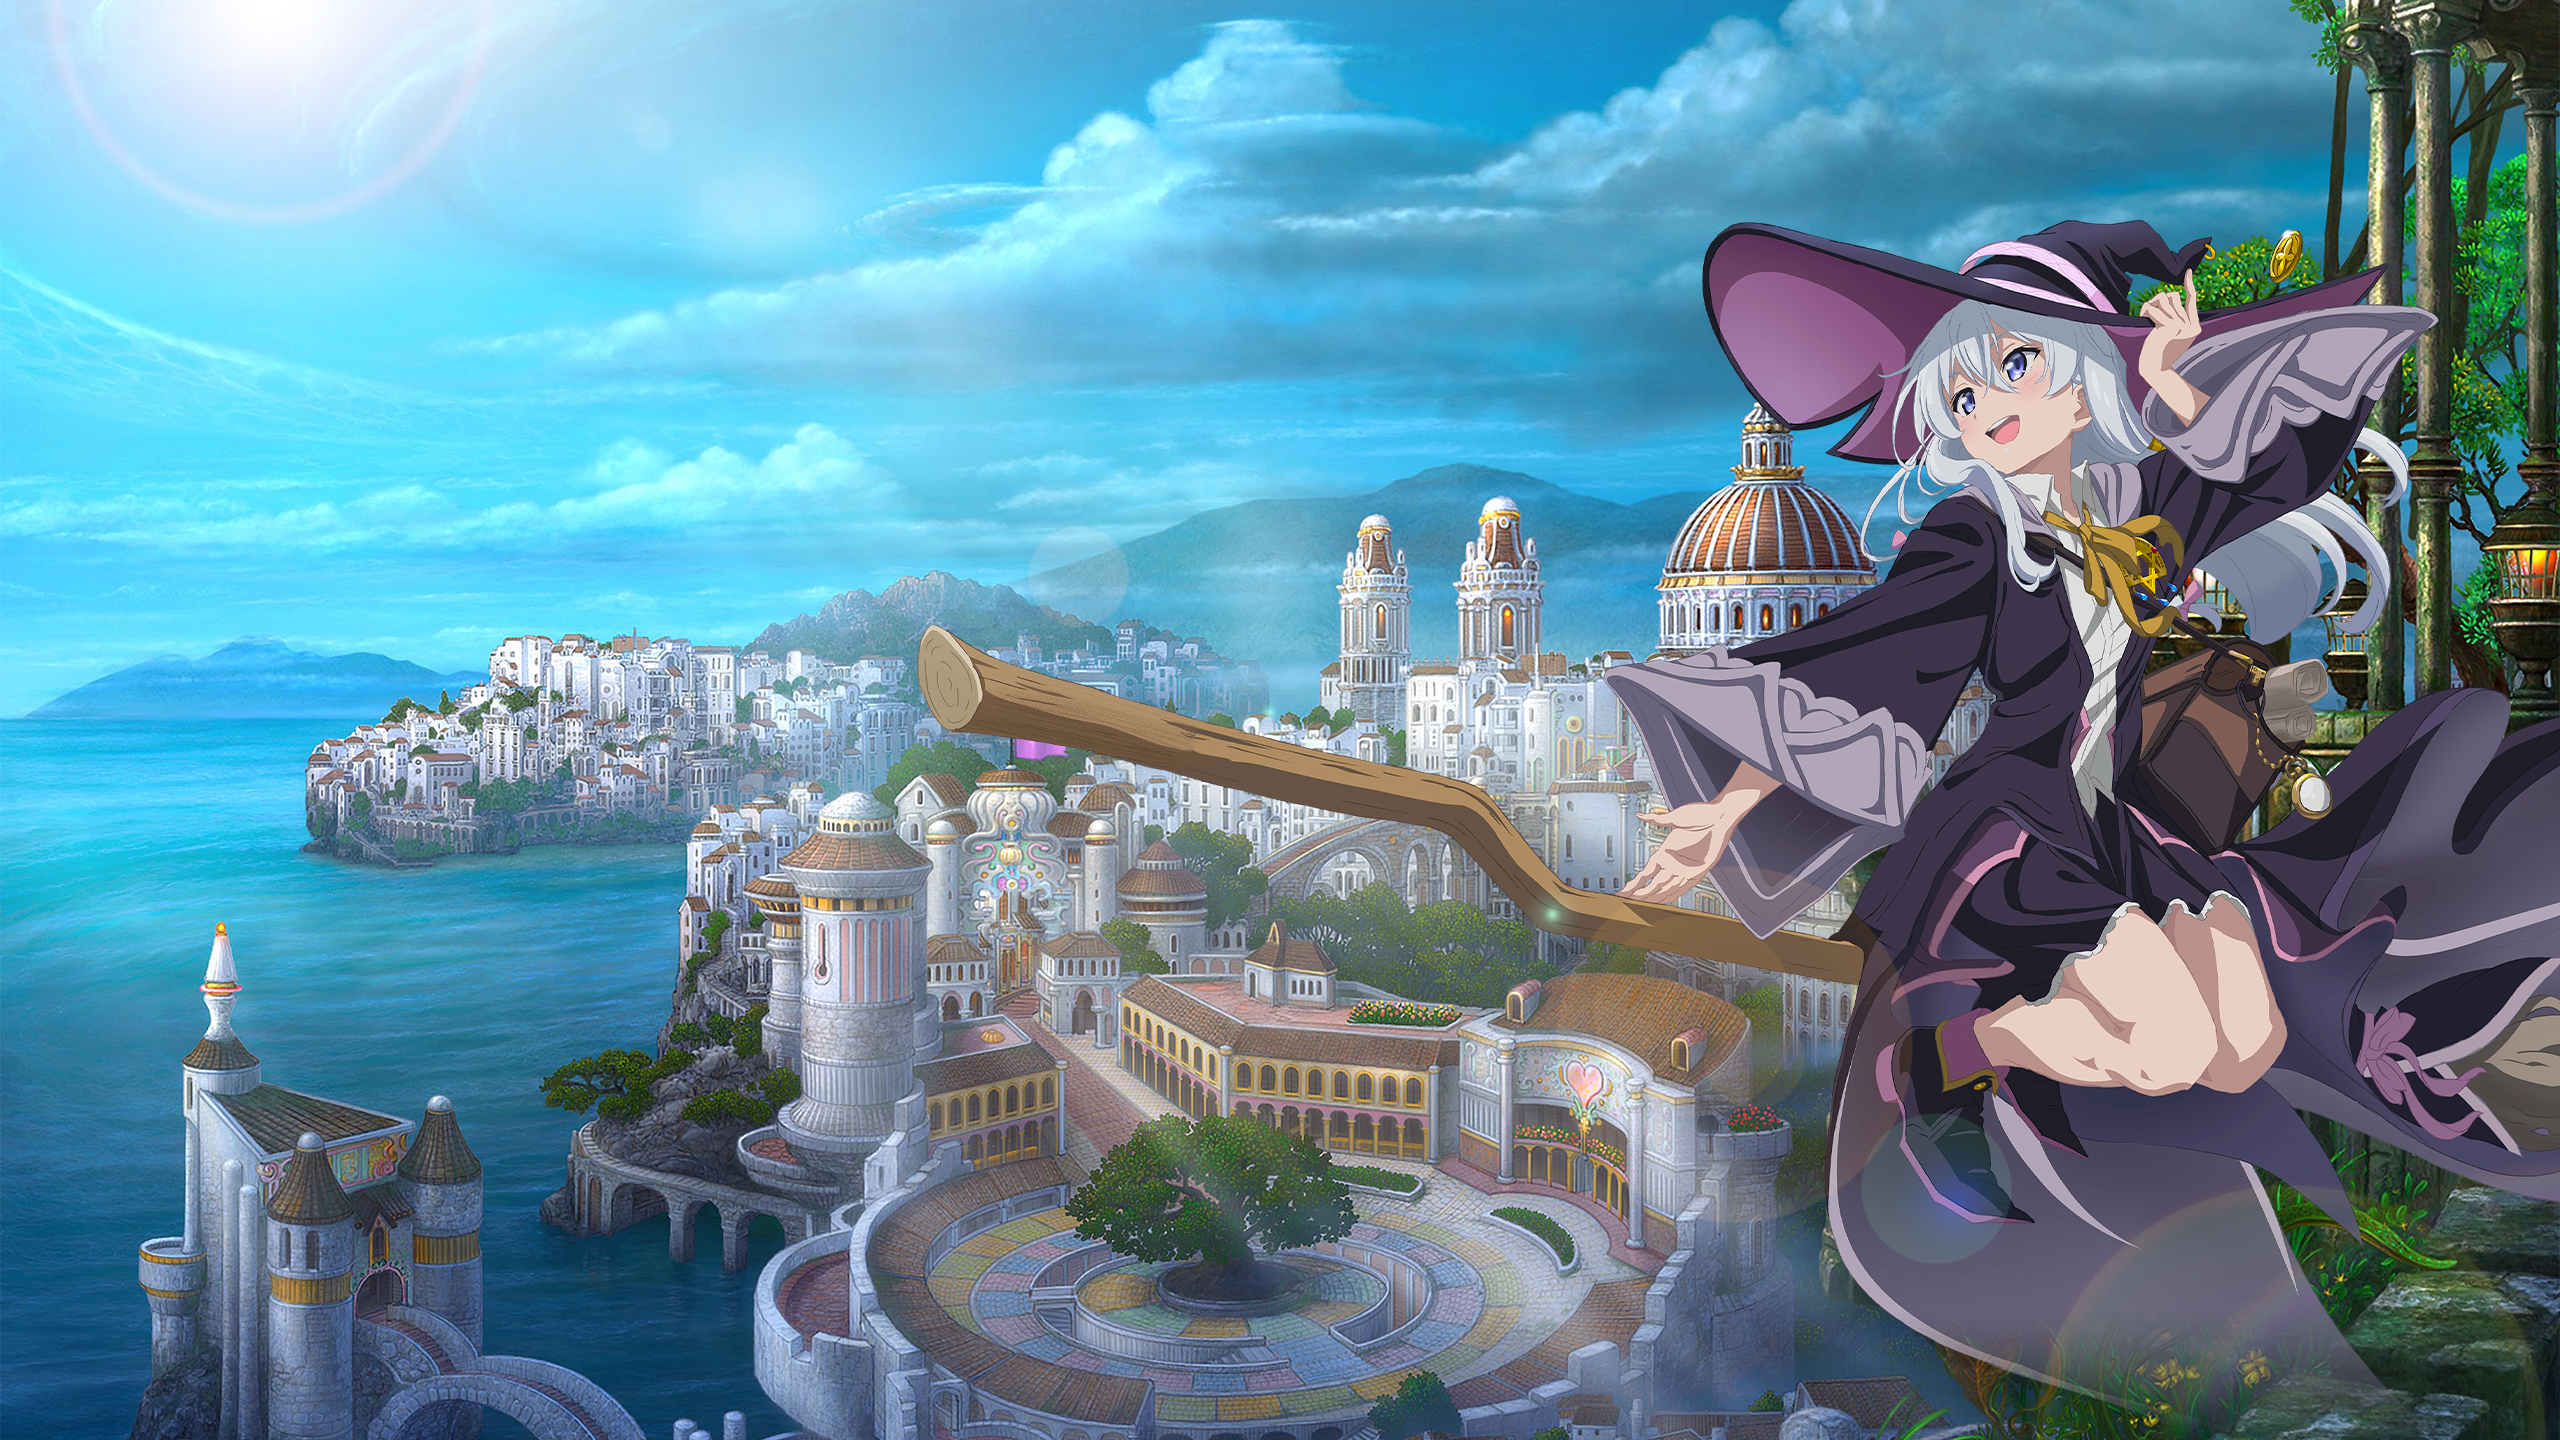 Anime The Journey of Elaina HD Wallpaper | Background Image